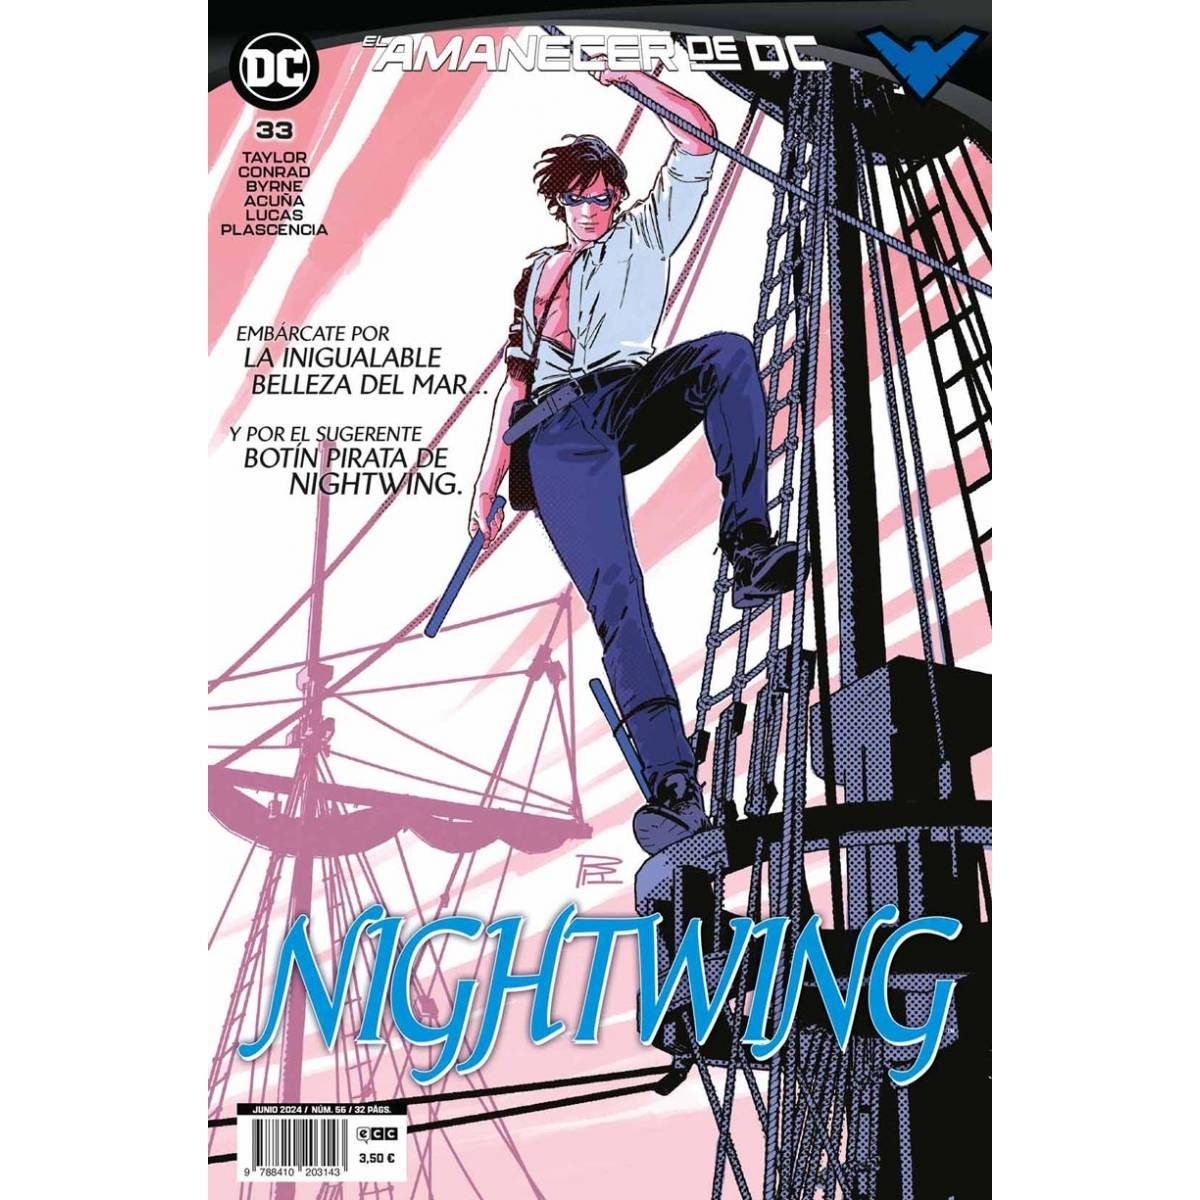 Nightwing 33